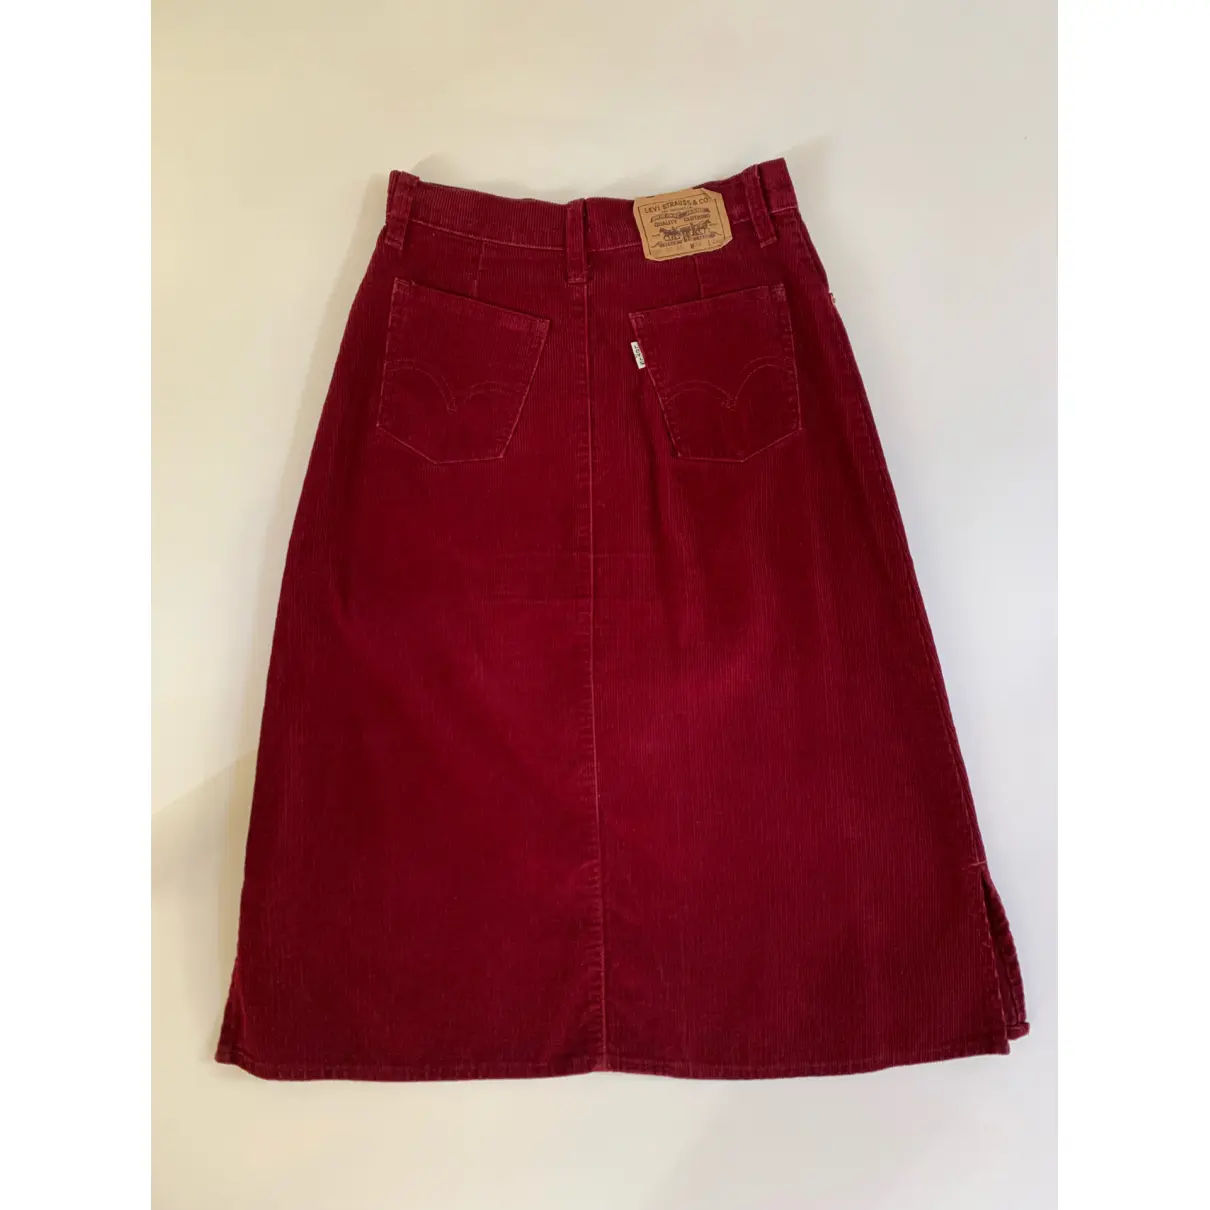 Buy Levi's Vintage Clothing Mid-length skirt online